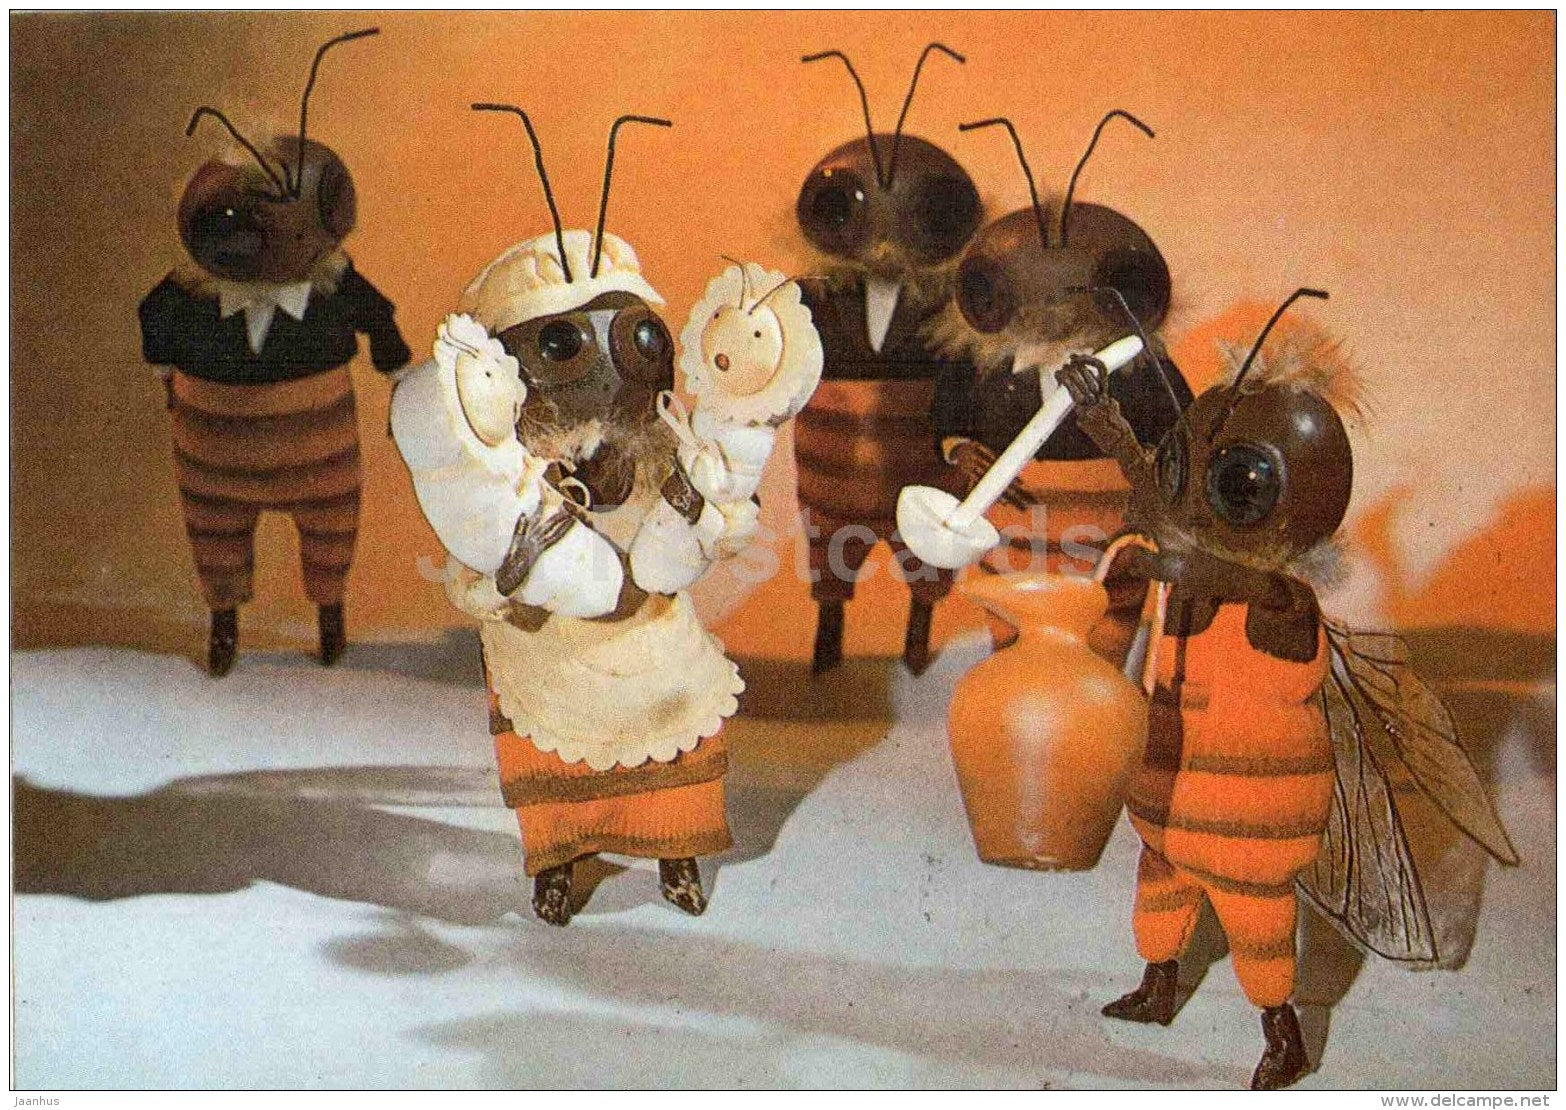 The Town of Honey Masters - Bee - Puppet movie - 1990 - Estonia USSR - unused - JH Postcards